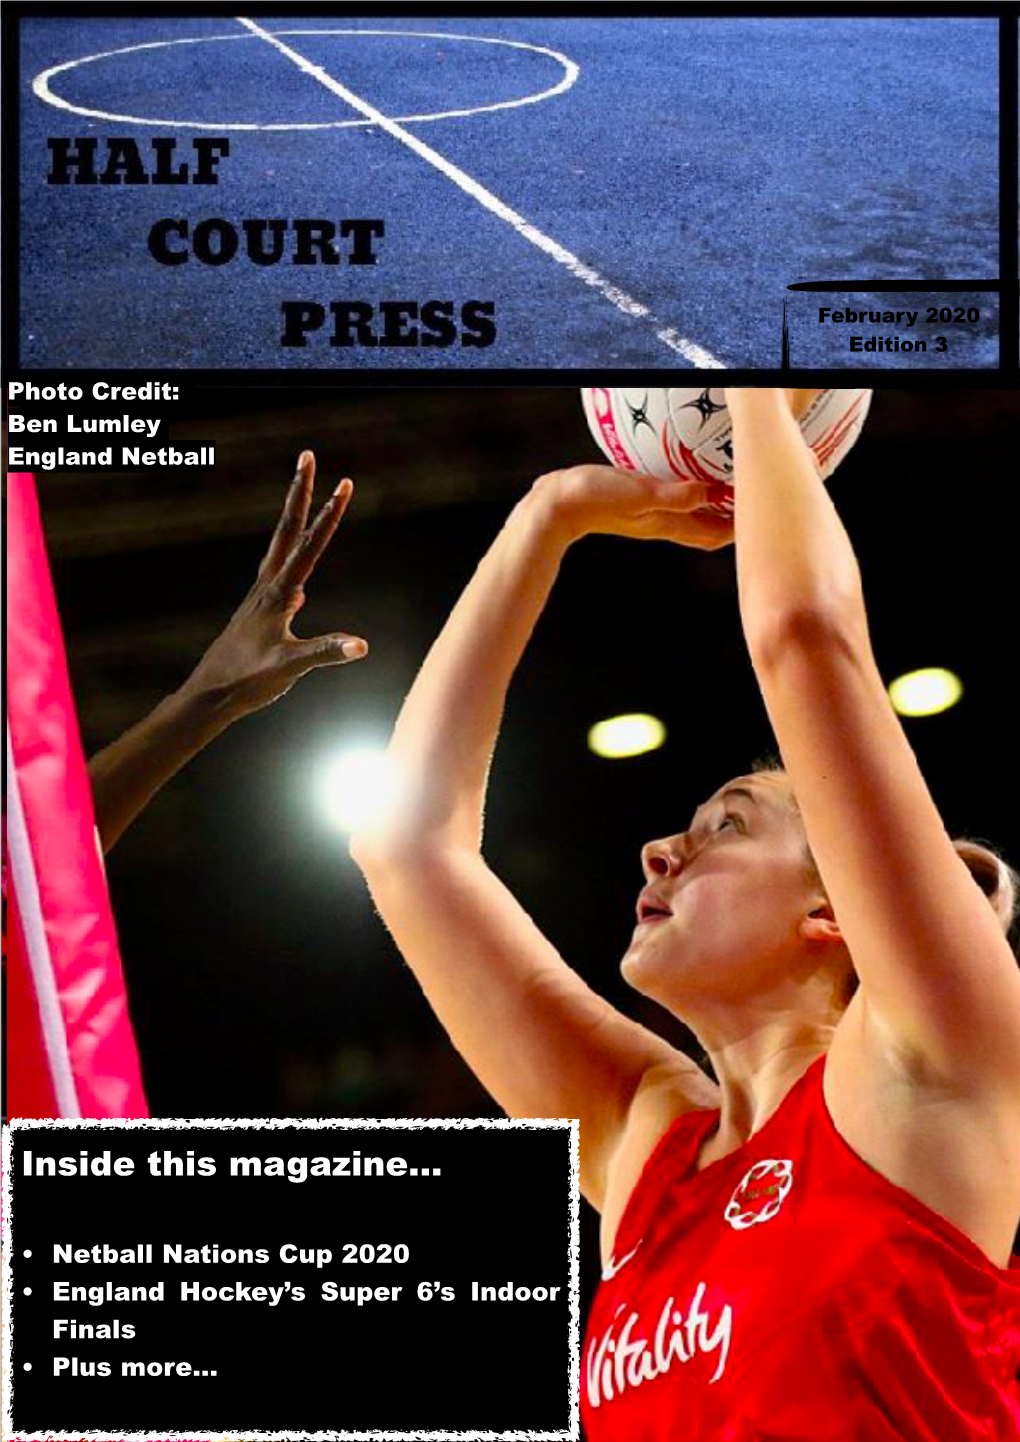 The Half Court Press Magazine Edition 3